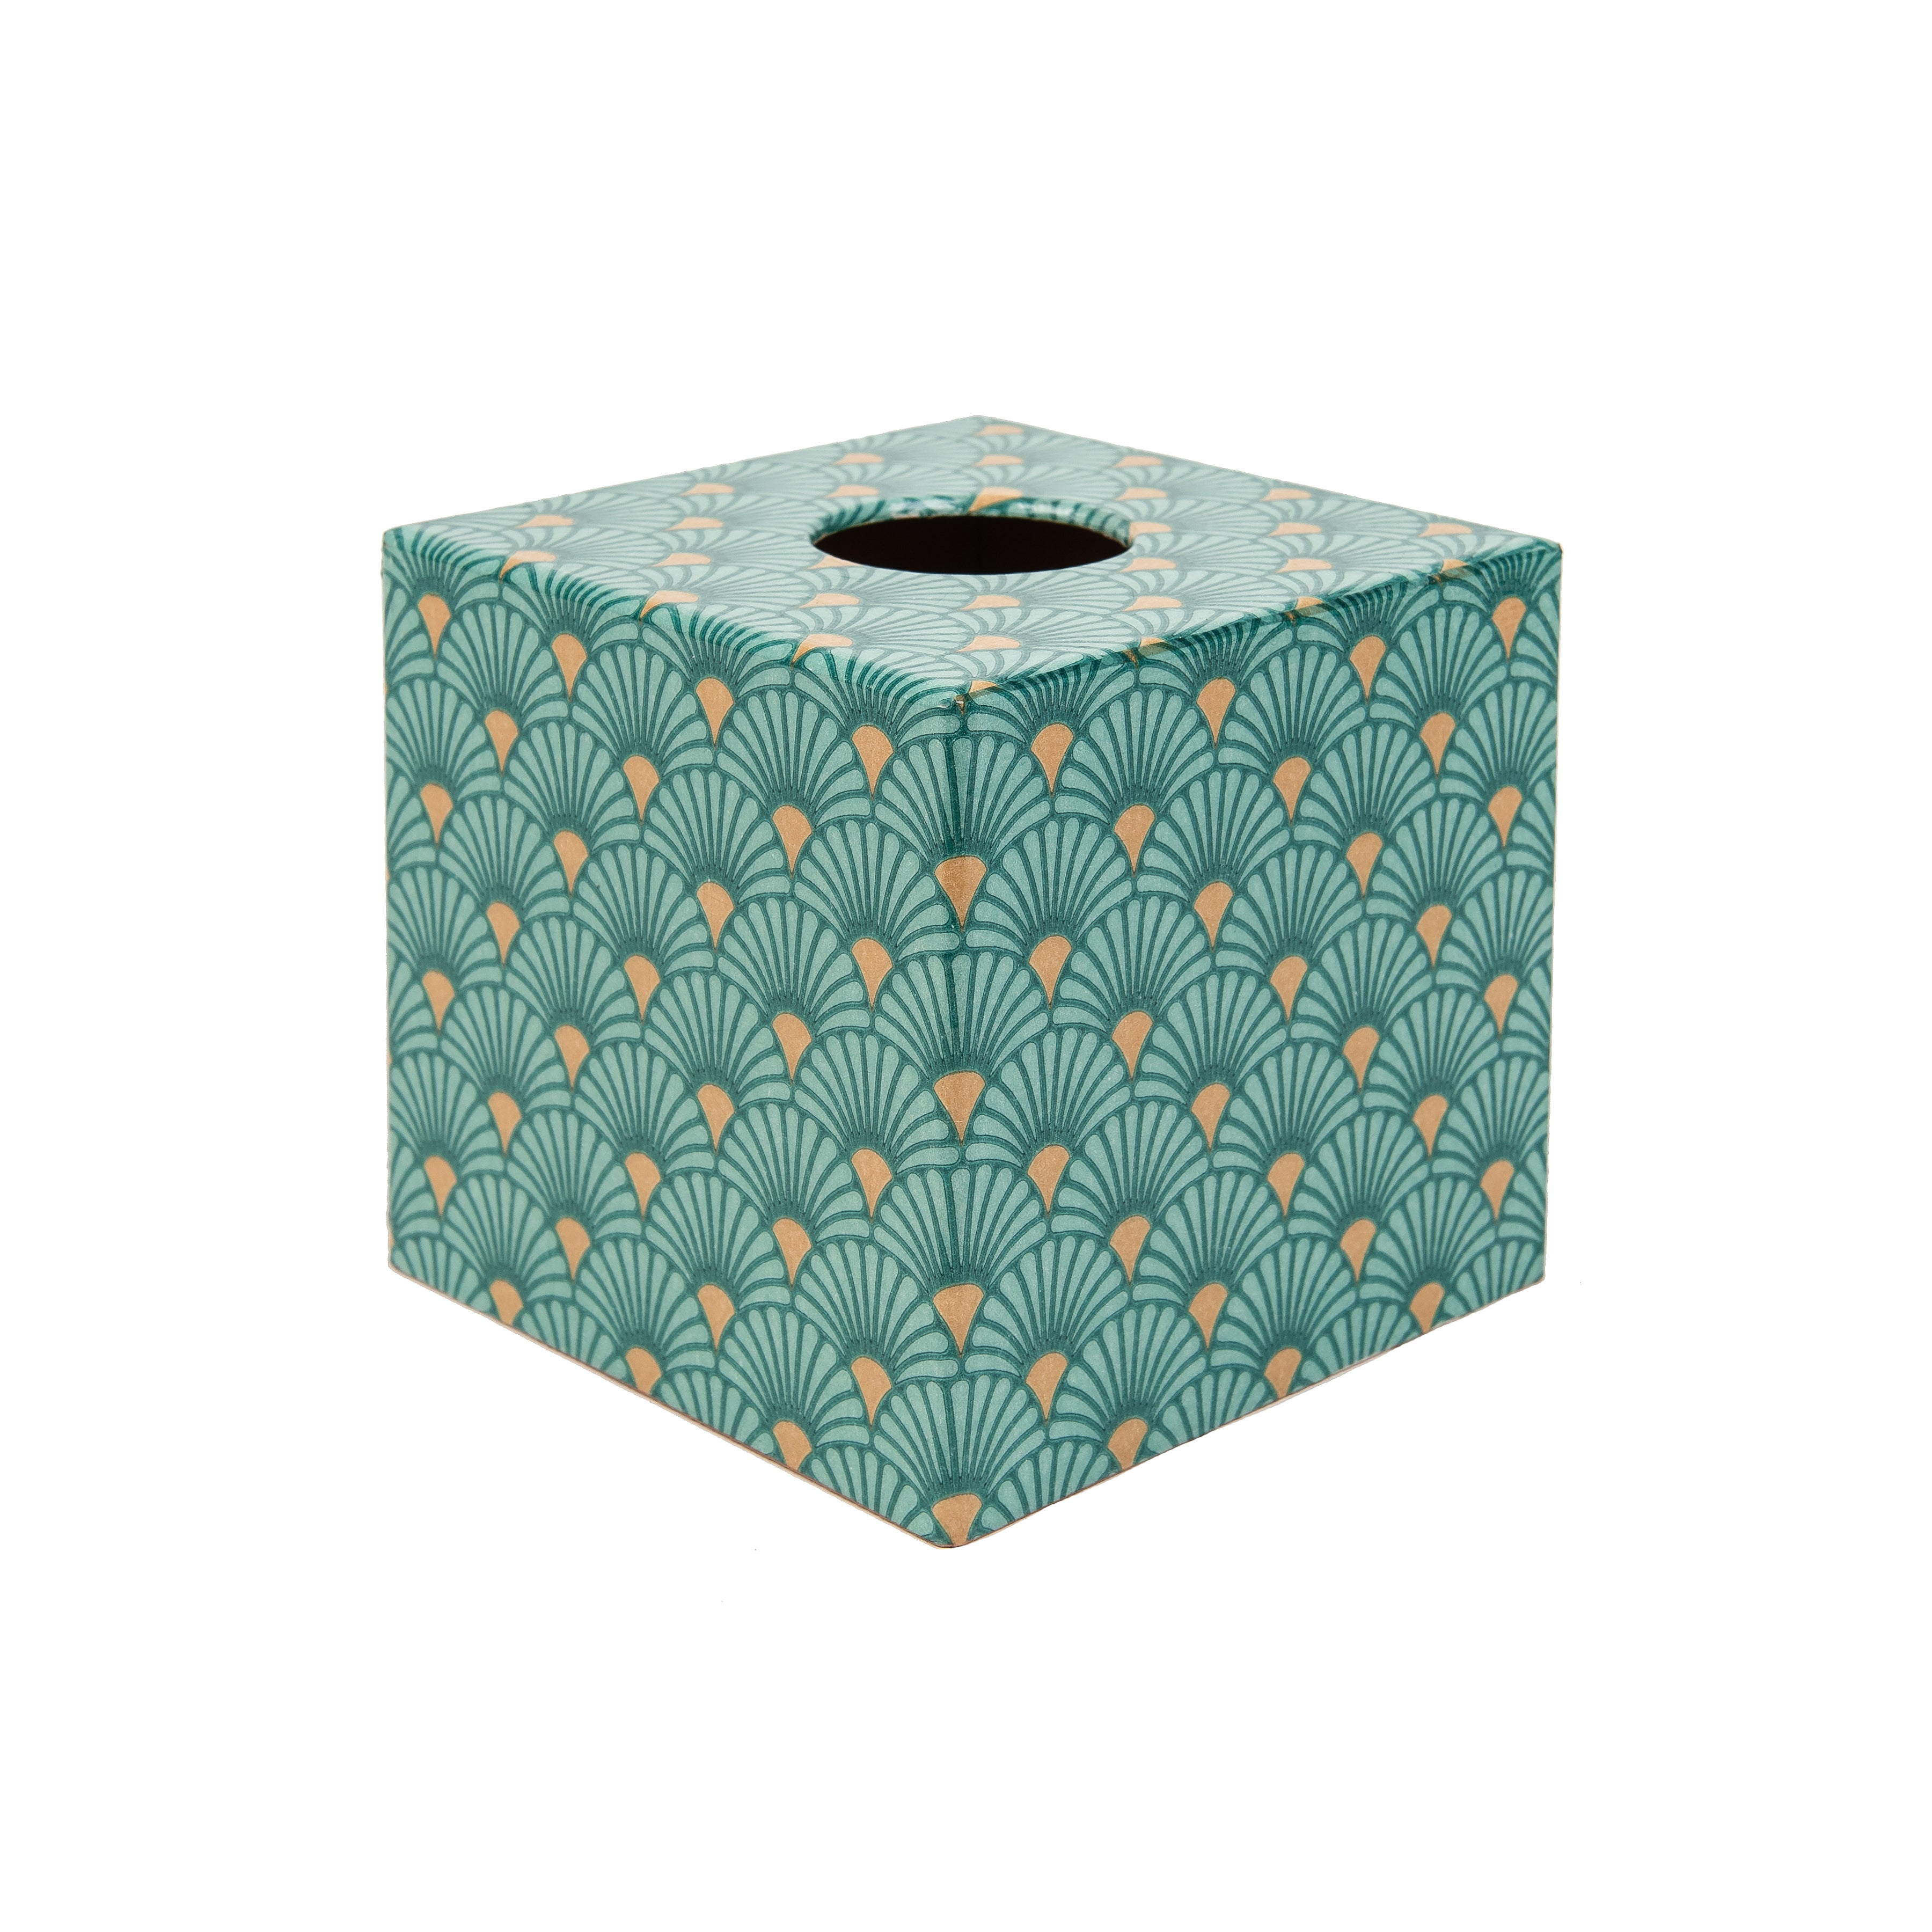 Art Deco Green Tissue Box Cover & Matching Waste Bin